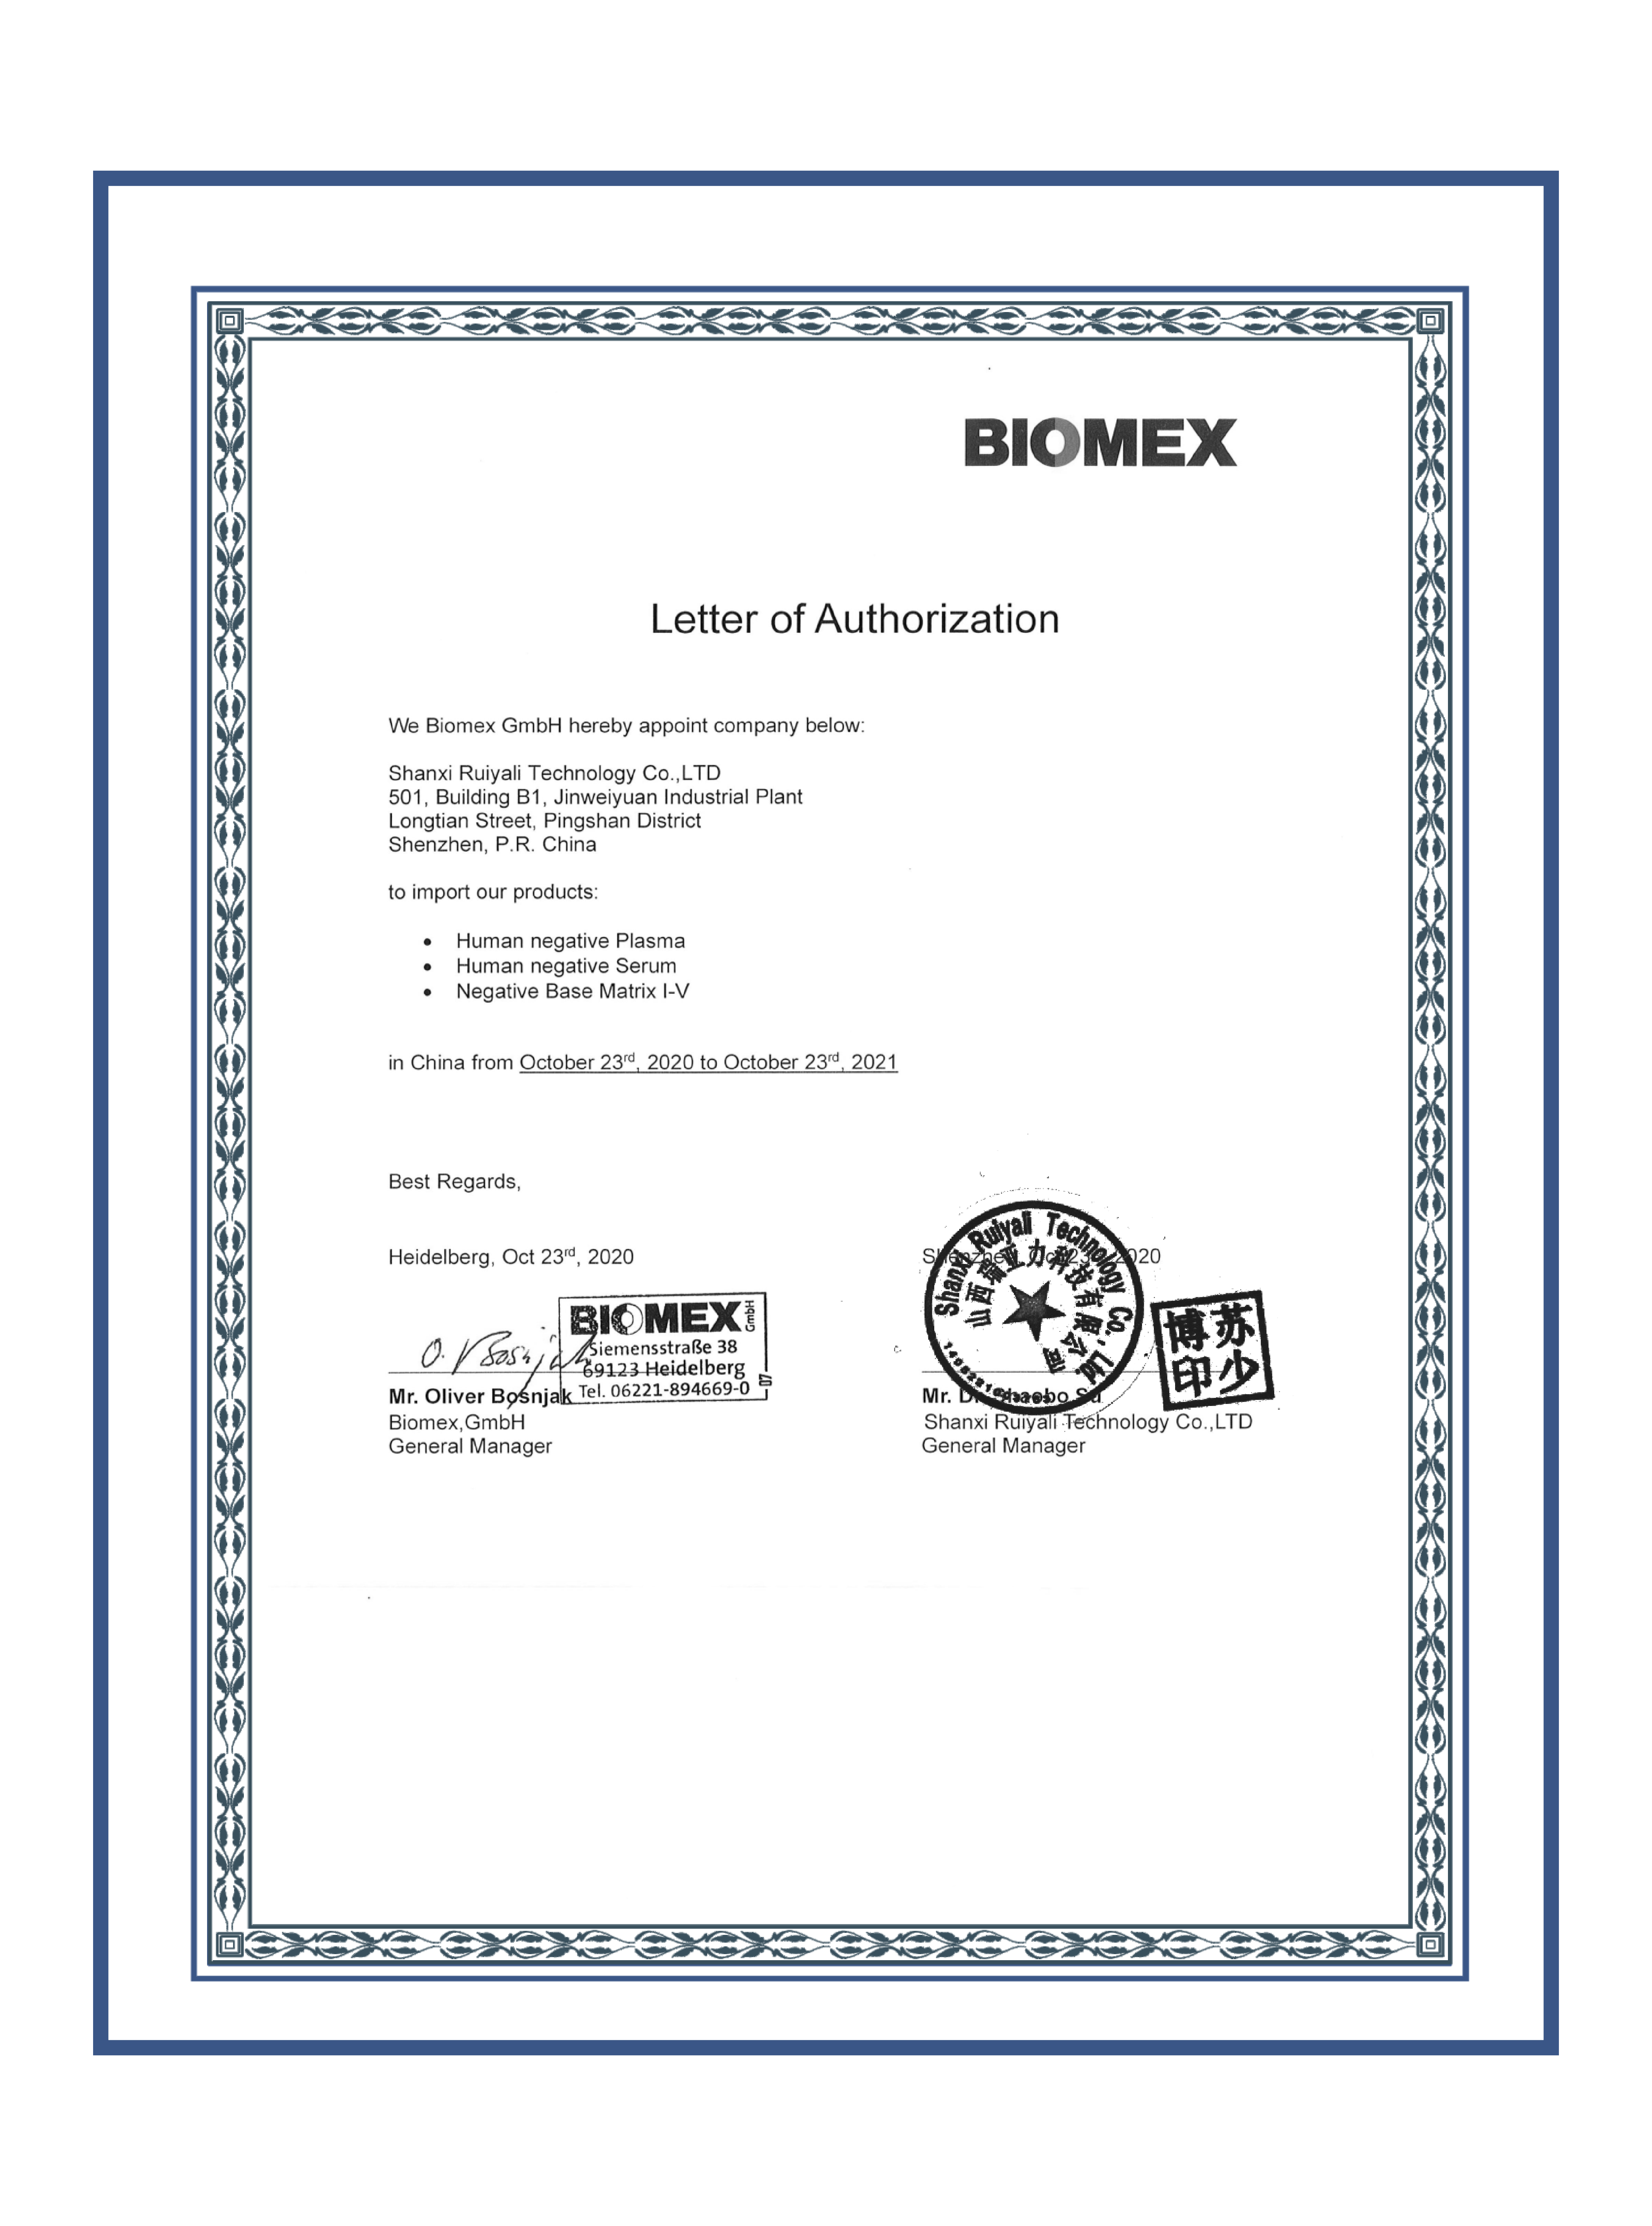 Shanxi Ruiyali Technology Co., Ltd. and Germany BIOMEX signed a strategic cooperation agreement